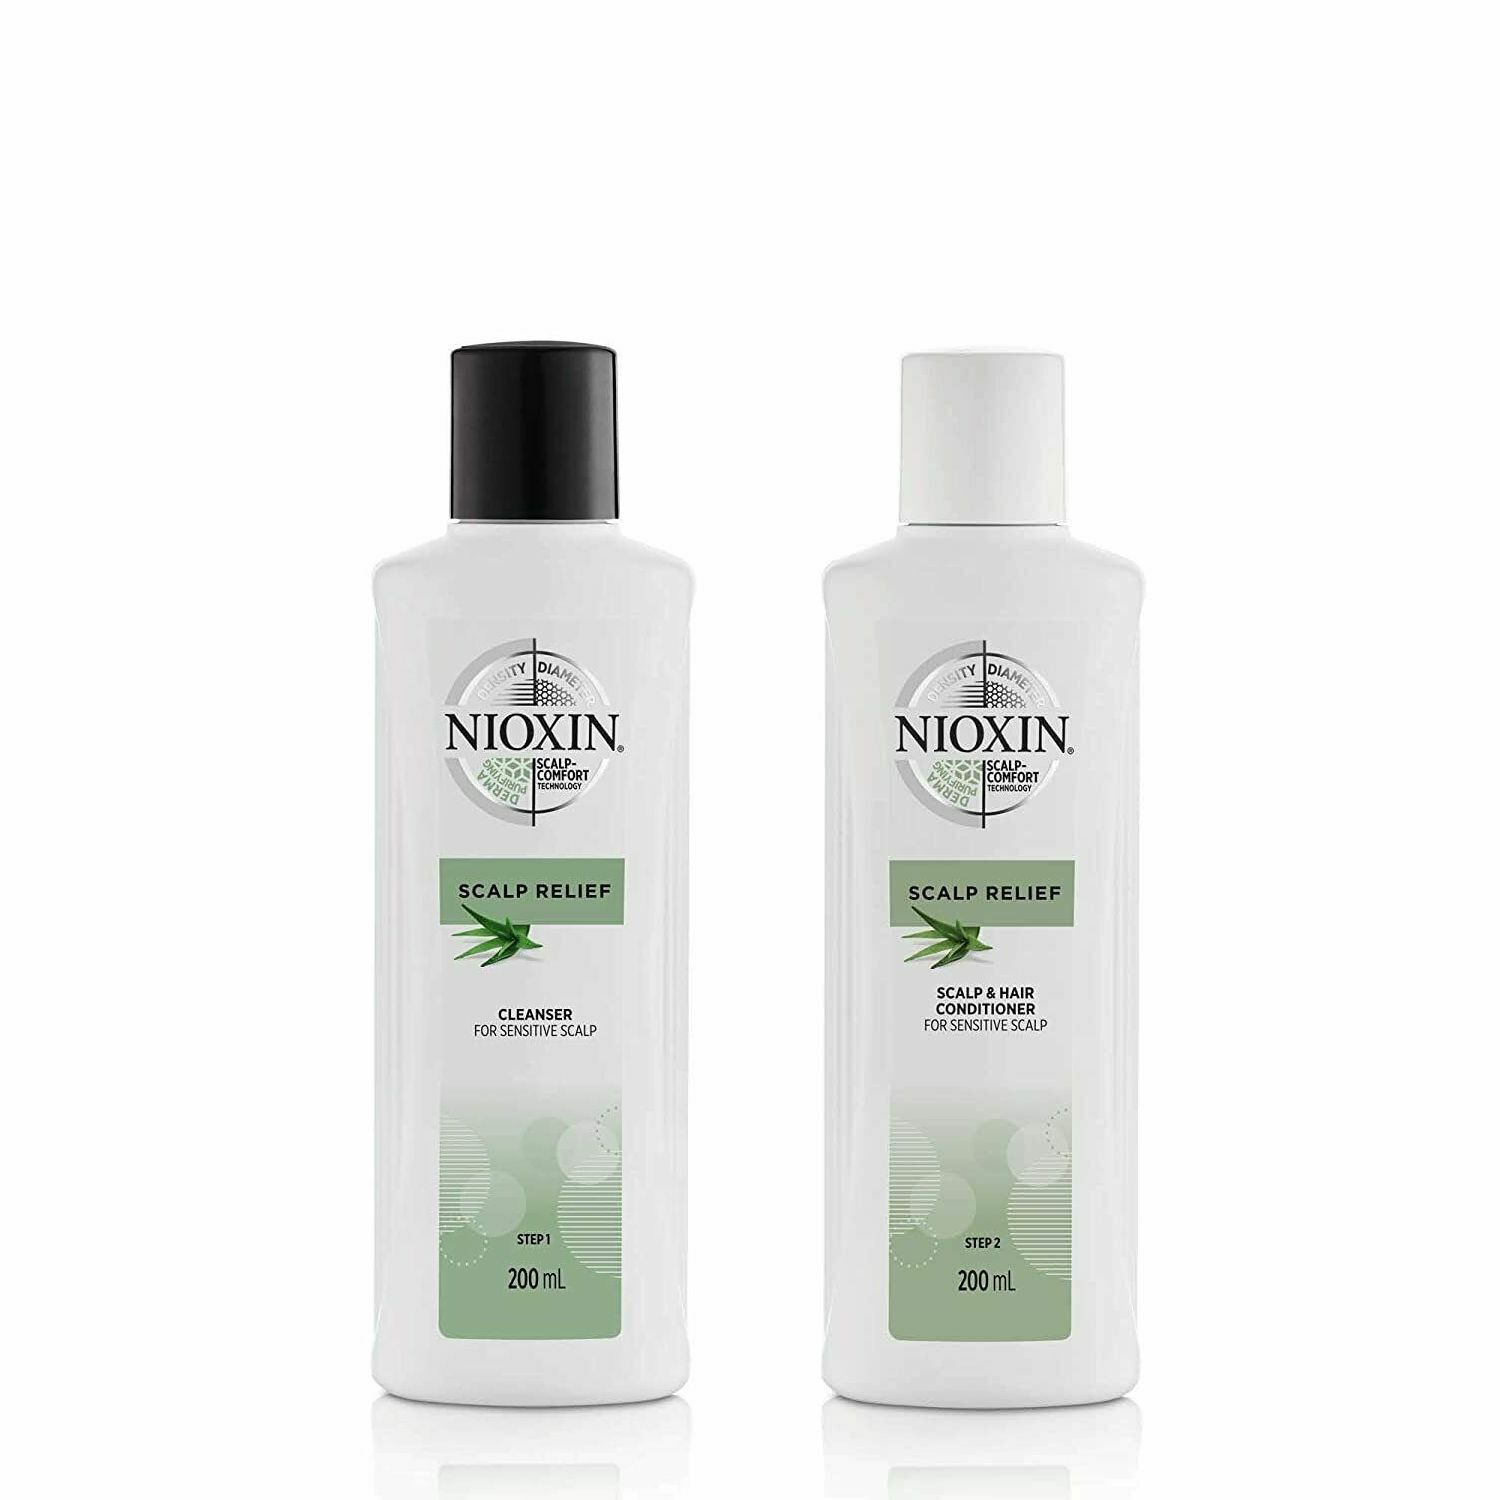 Nioxin Scalp Relief Cleanser Shampoo & Conditioner Duo 6.7 oz each new fresh - $30.99